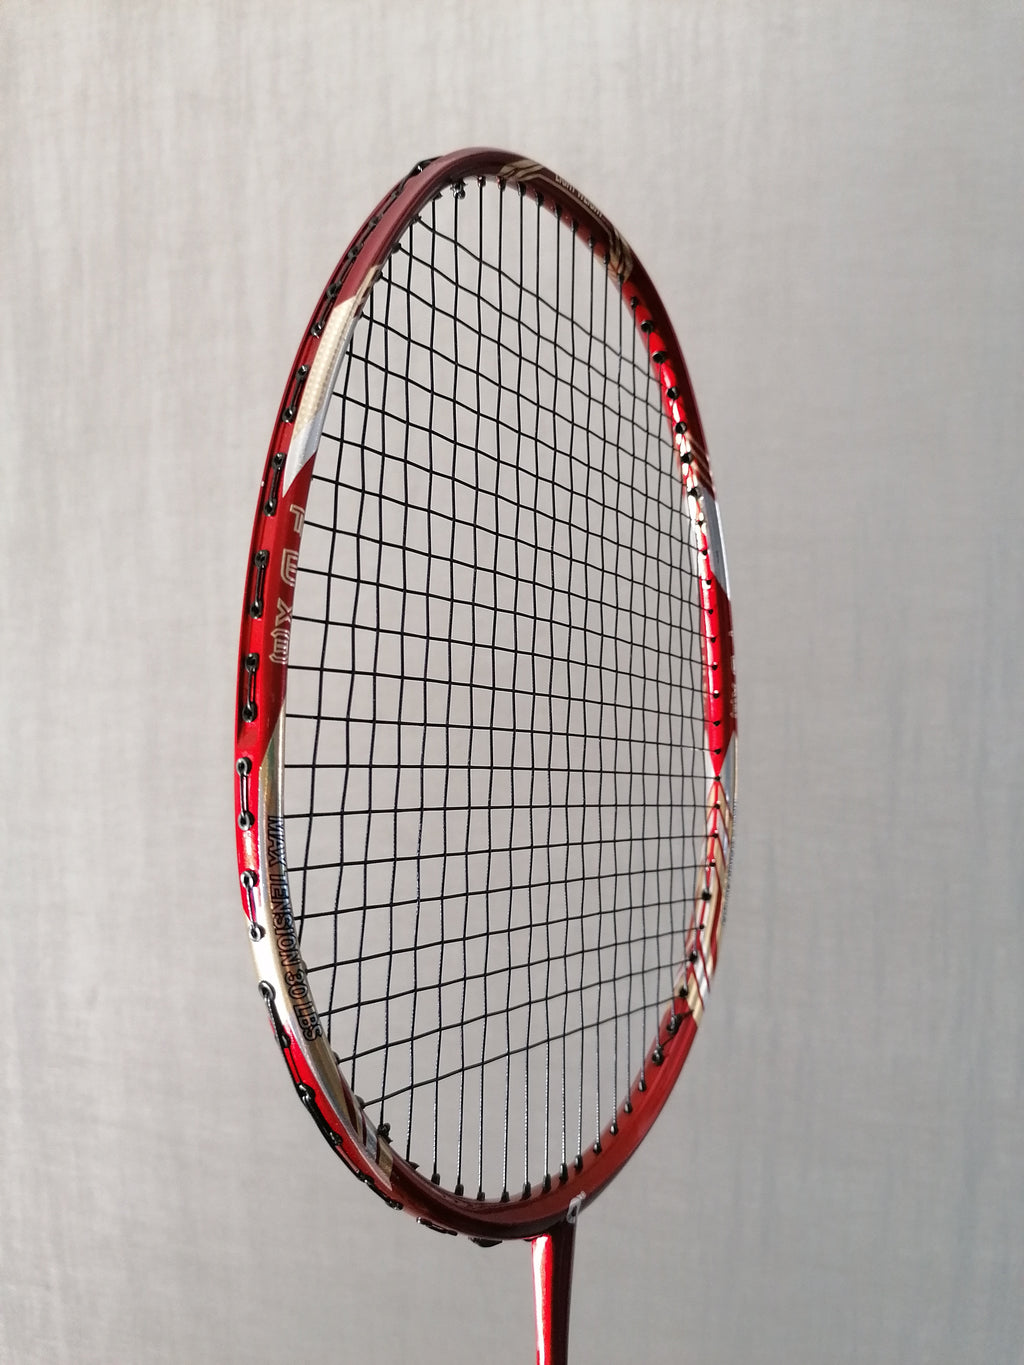 Apacs Featherweight X ii superlight 8u badminton racket badminton racket review